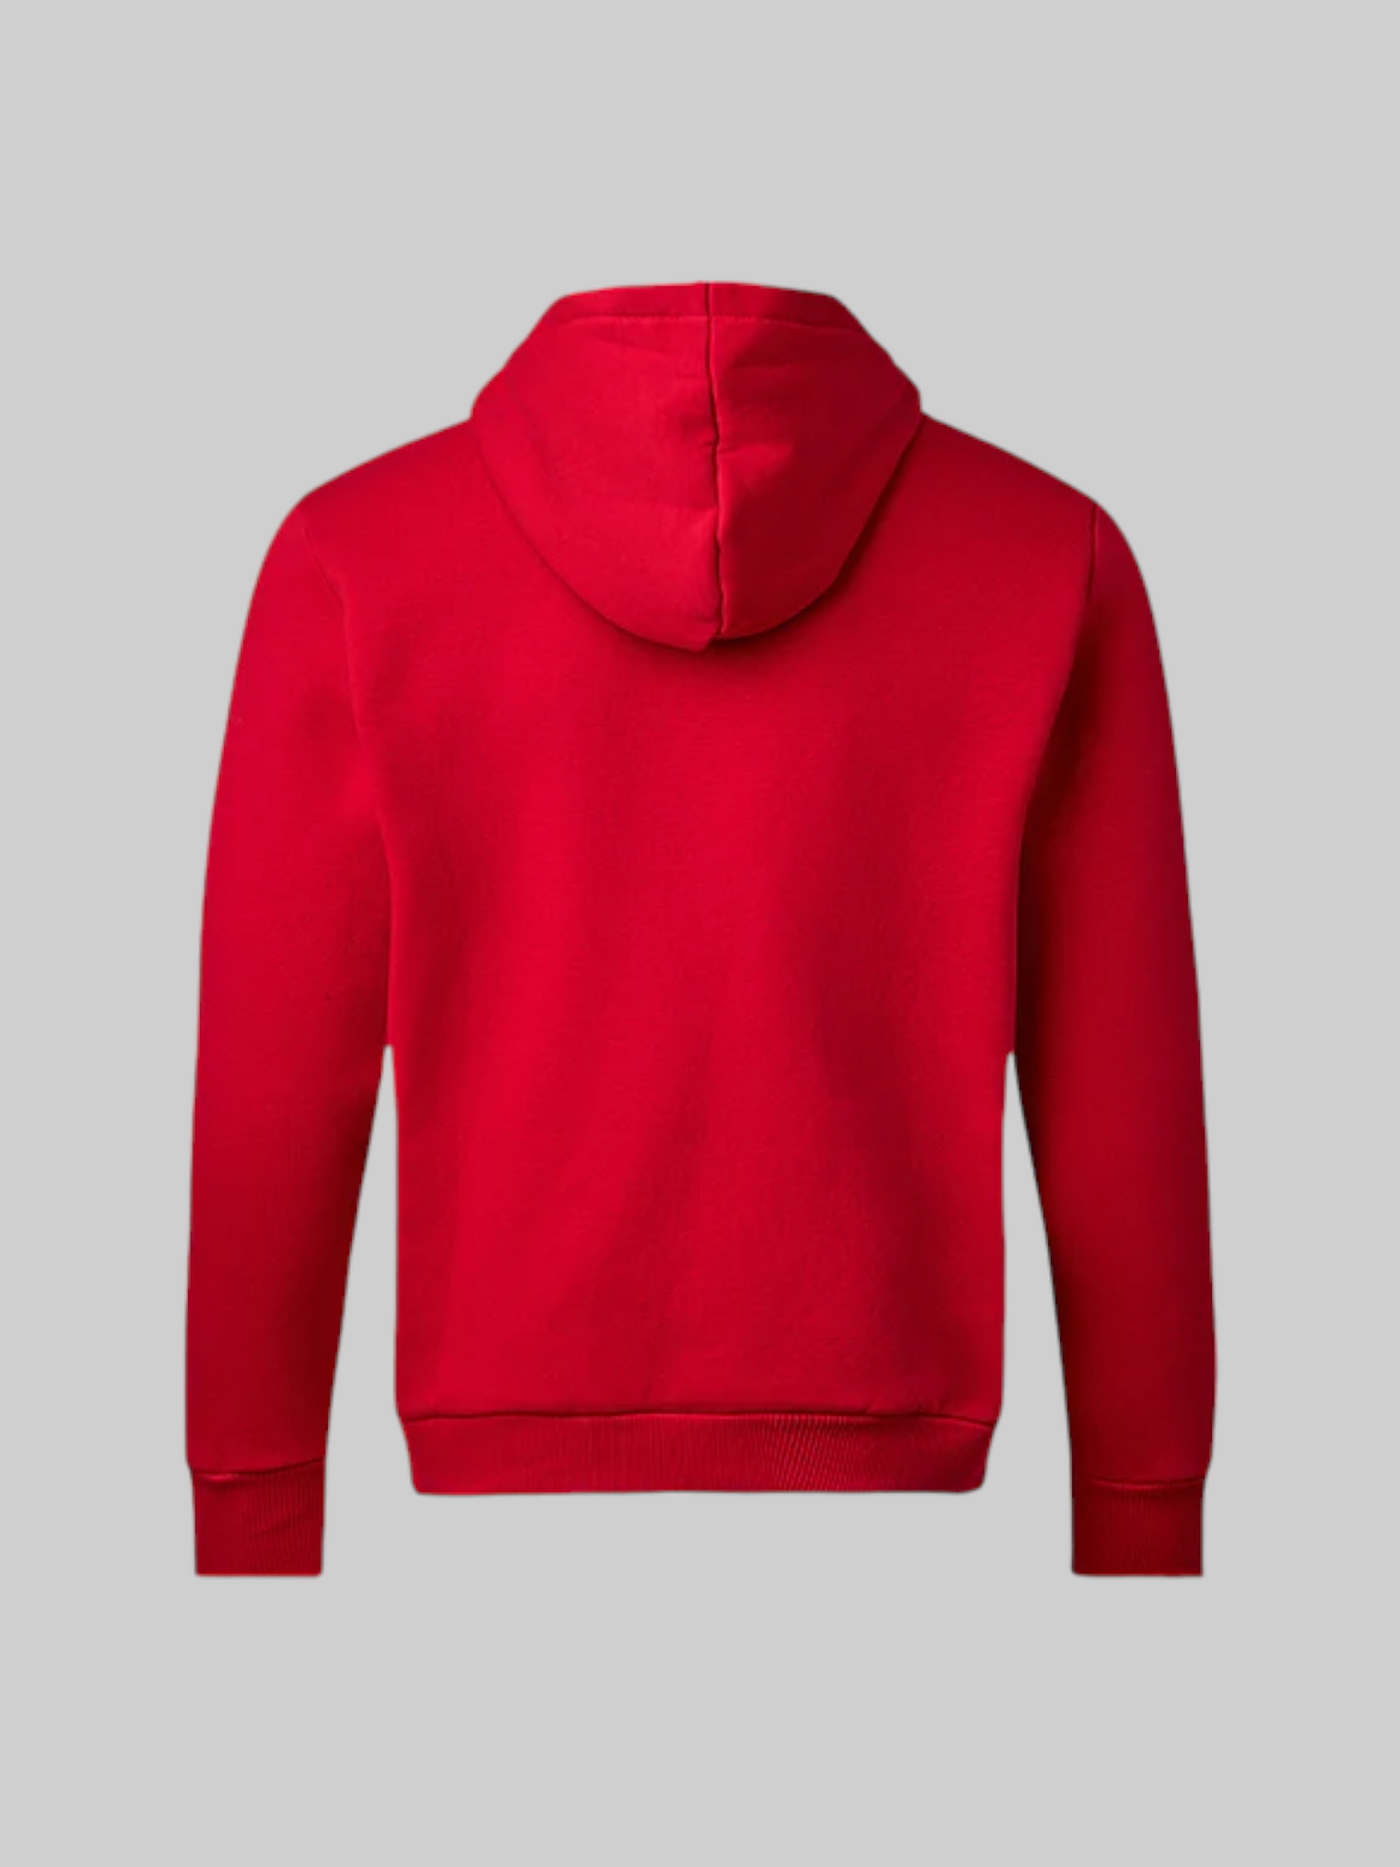 FirstGrade - CLUB / LOGO - Red hoodie 